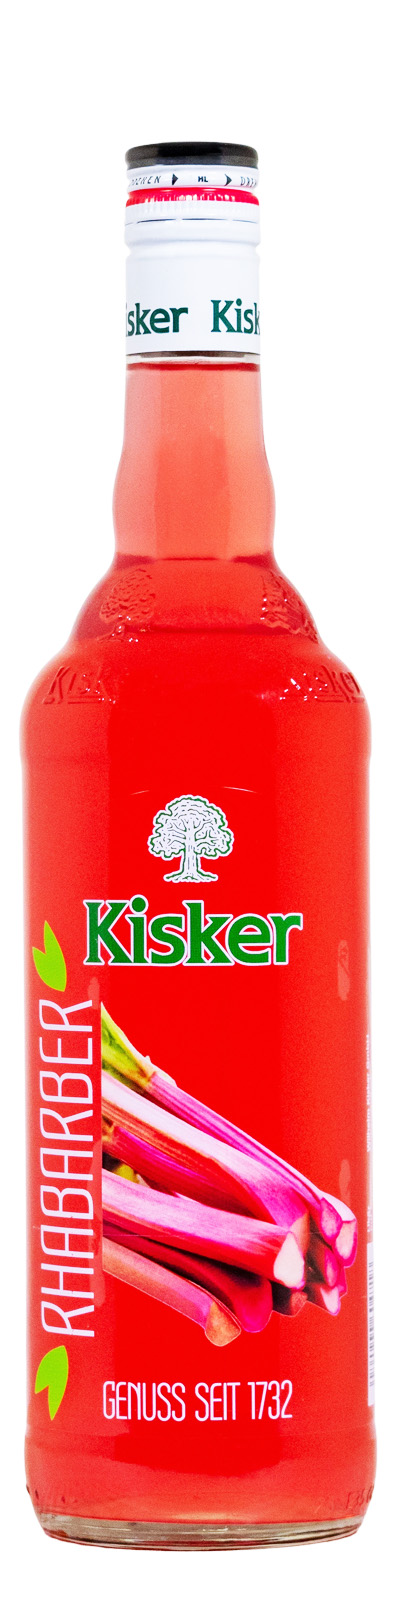 Kisker Rhabarber Likör - 0,7L 15% vol